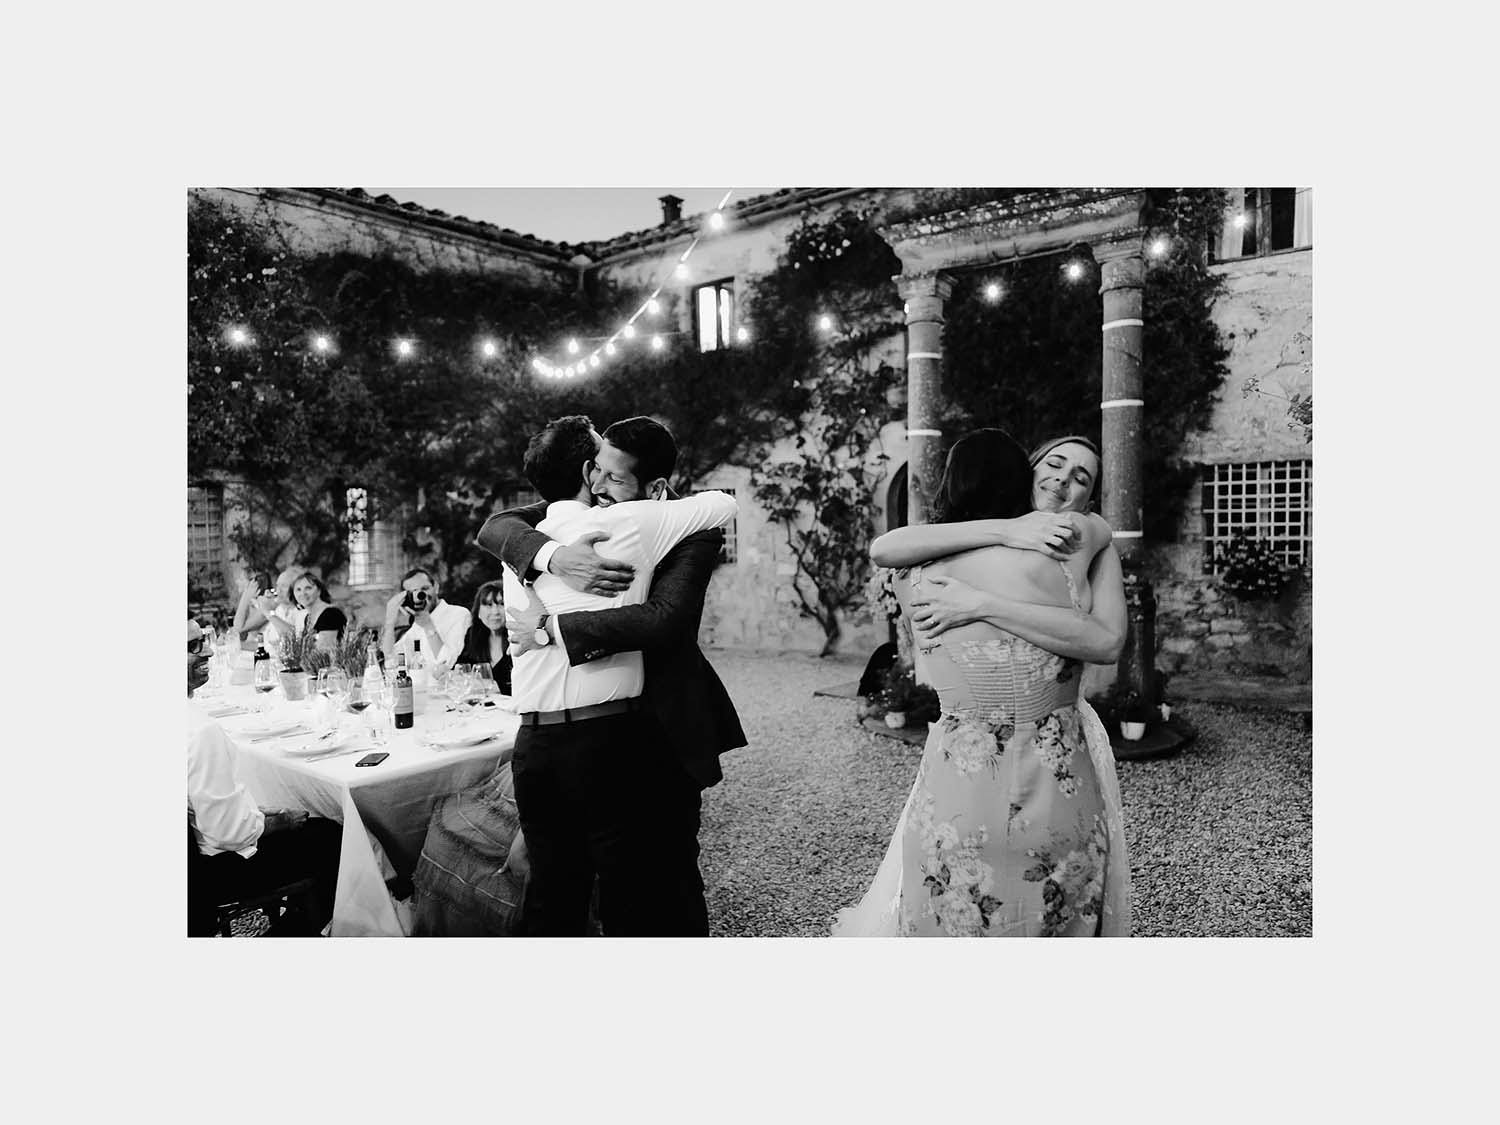 villa catignano wedding photogprapher siena symbolic jewish marriage outdoor al fresco dinner reception